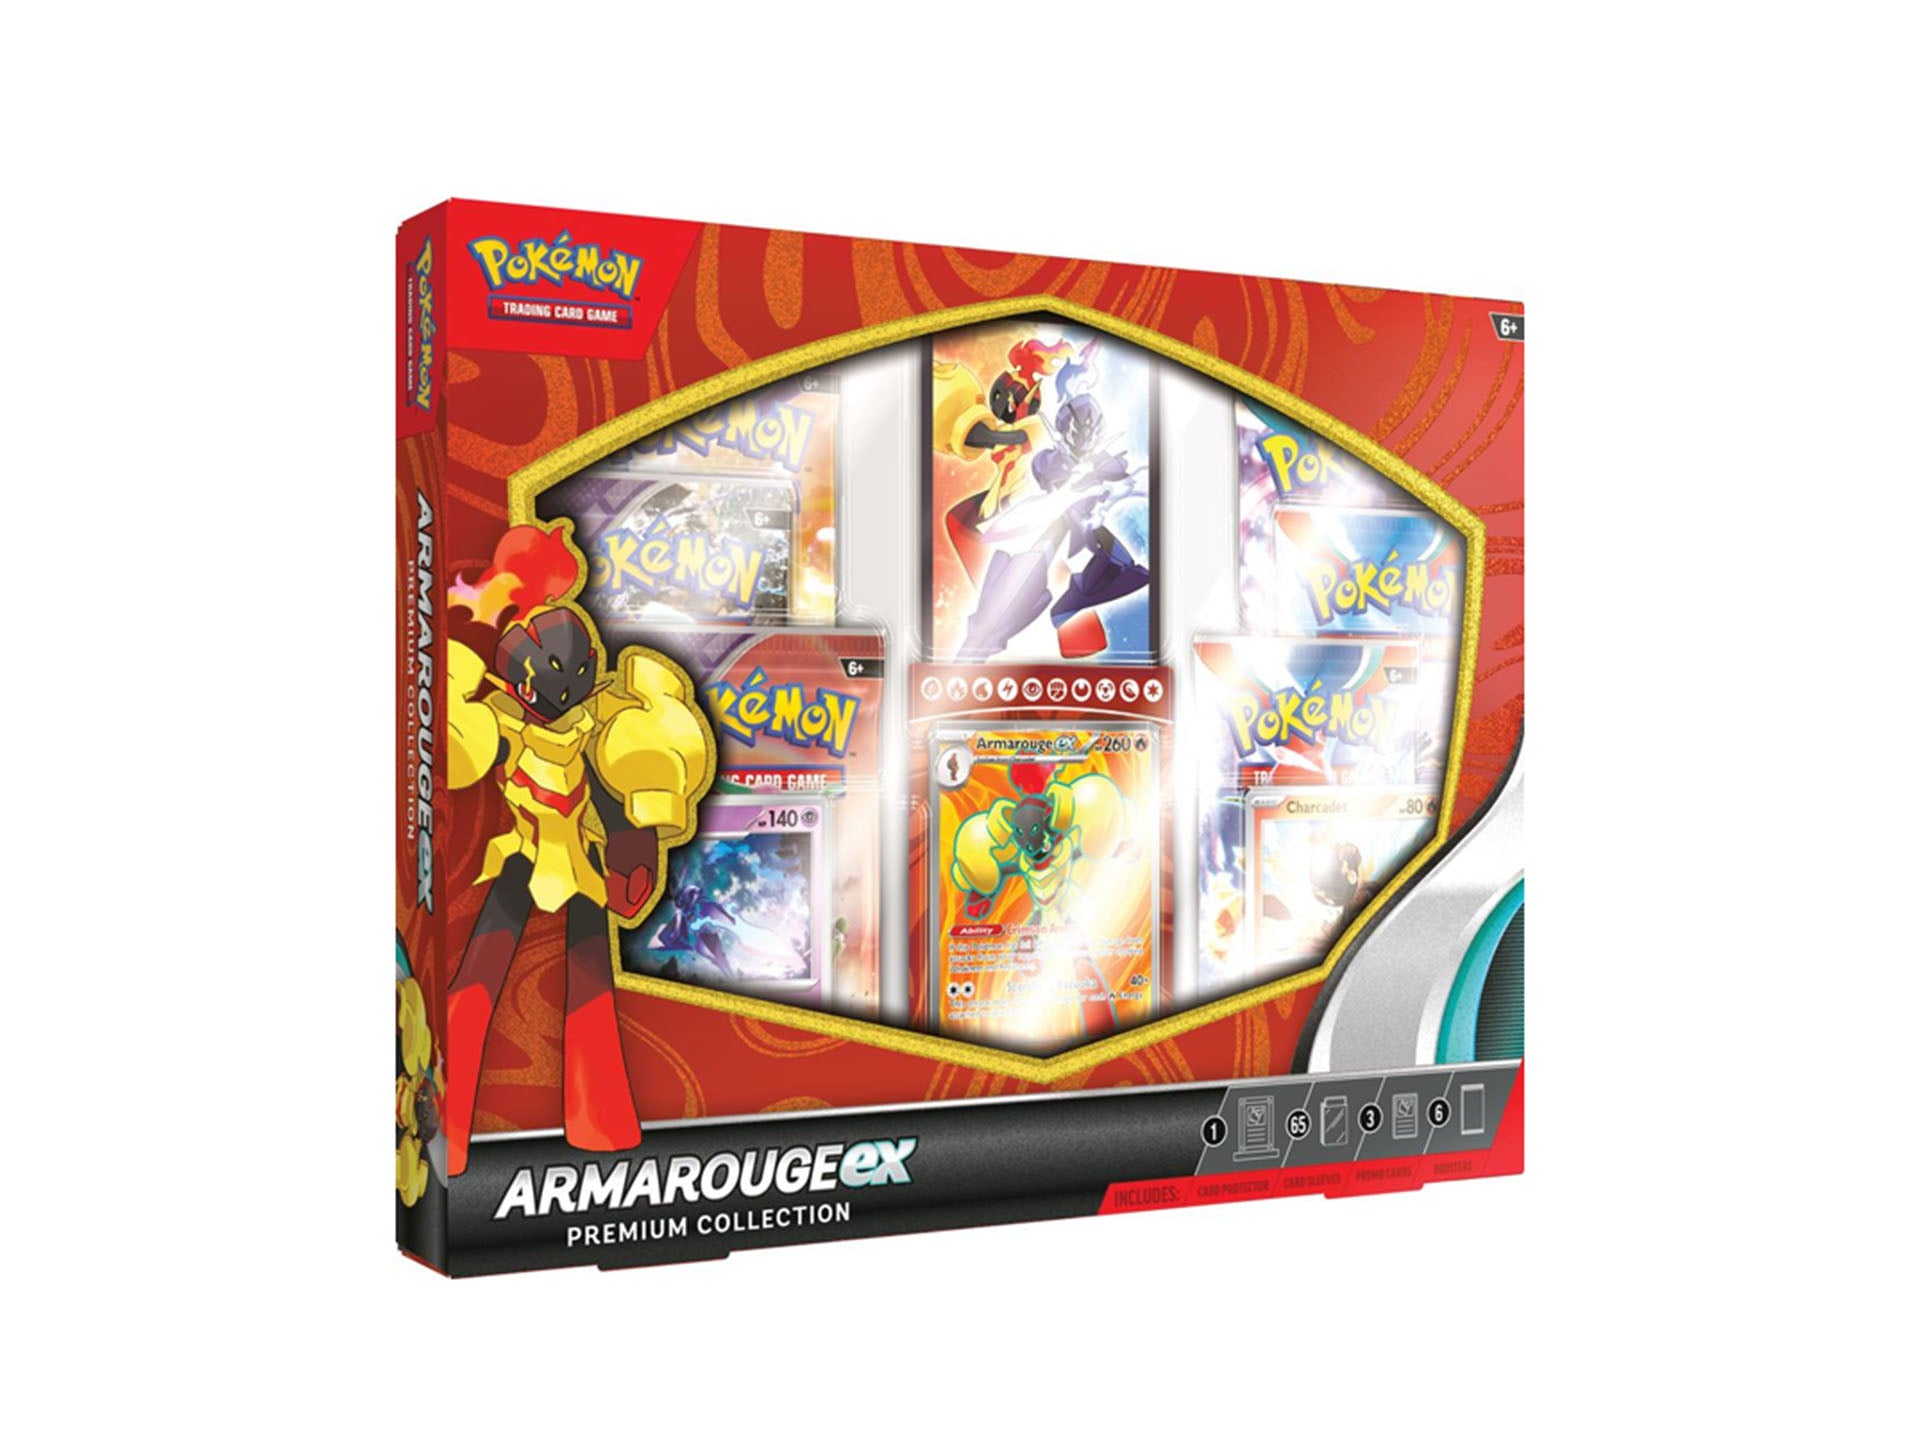 Pokémon Armarouge Ex Premium Collection